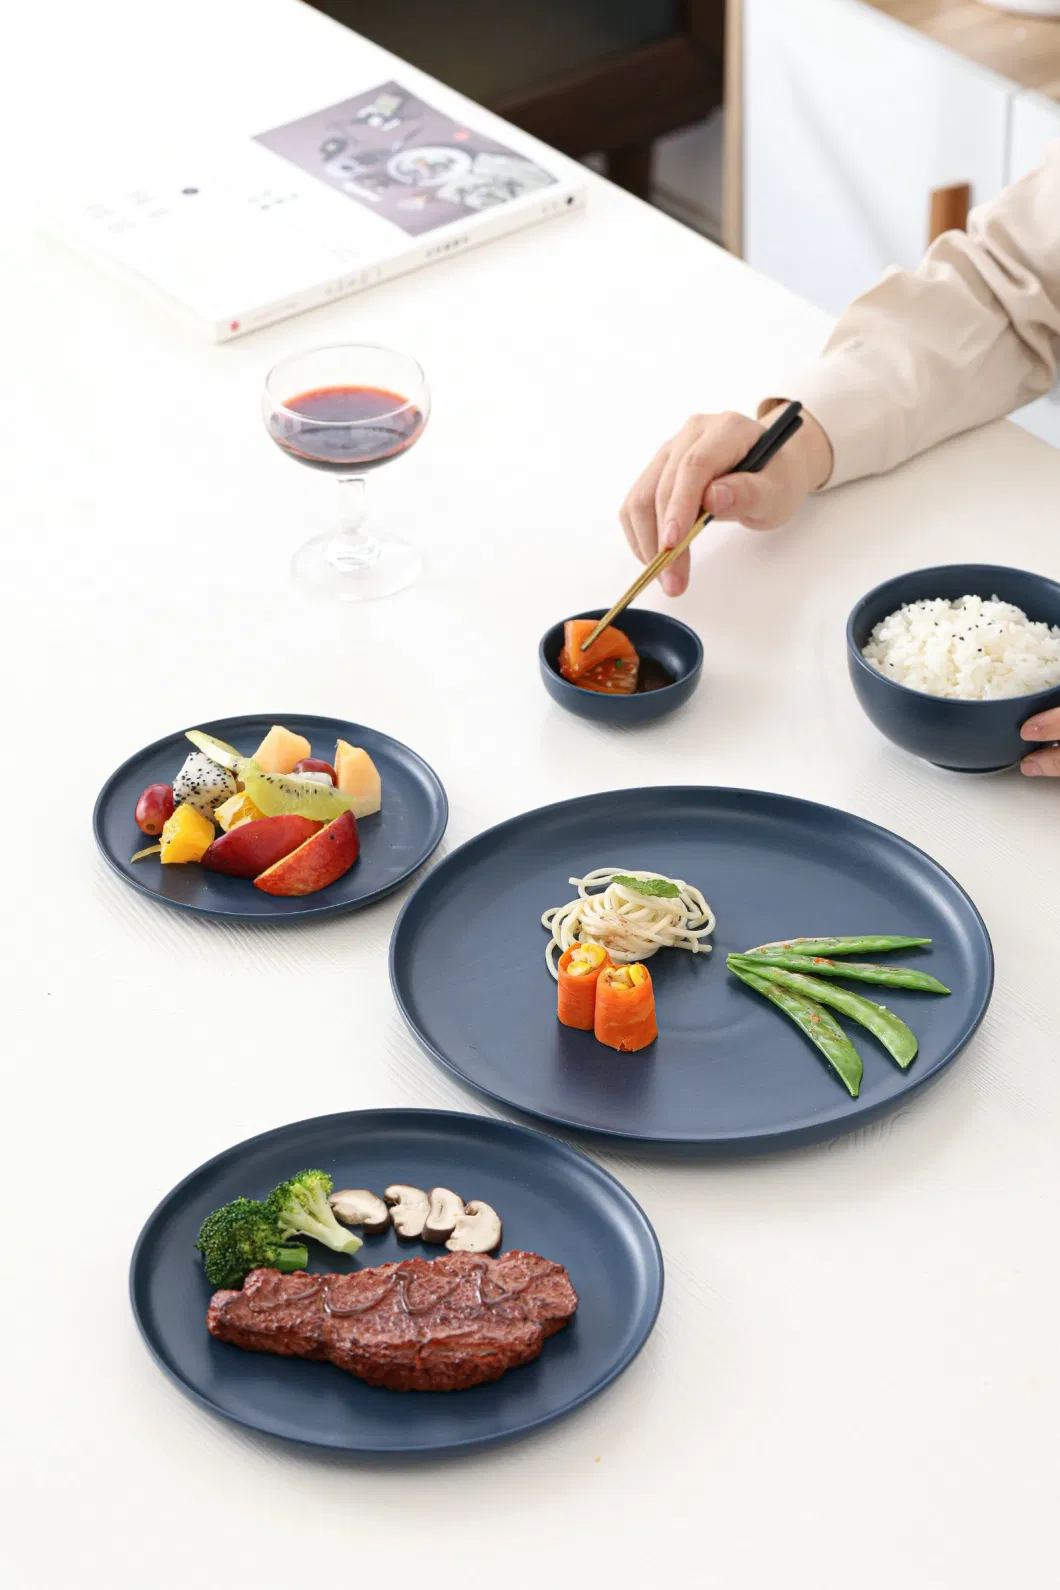 Nordic Matte Dark Navy Blue Round Tableware Dinner Rimmed Plates and Bowls Ceramic Dinnerware Set